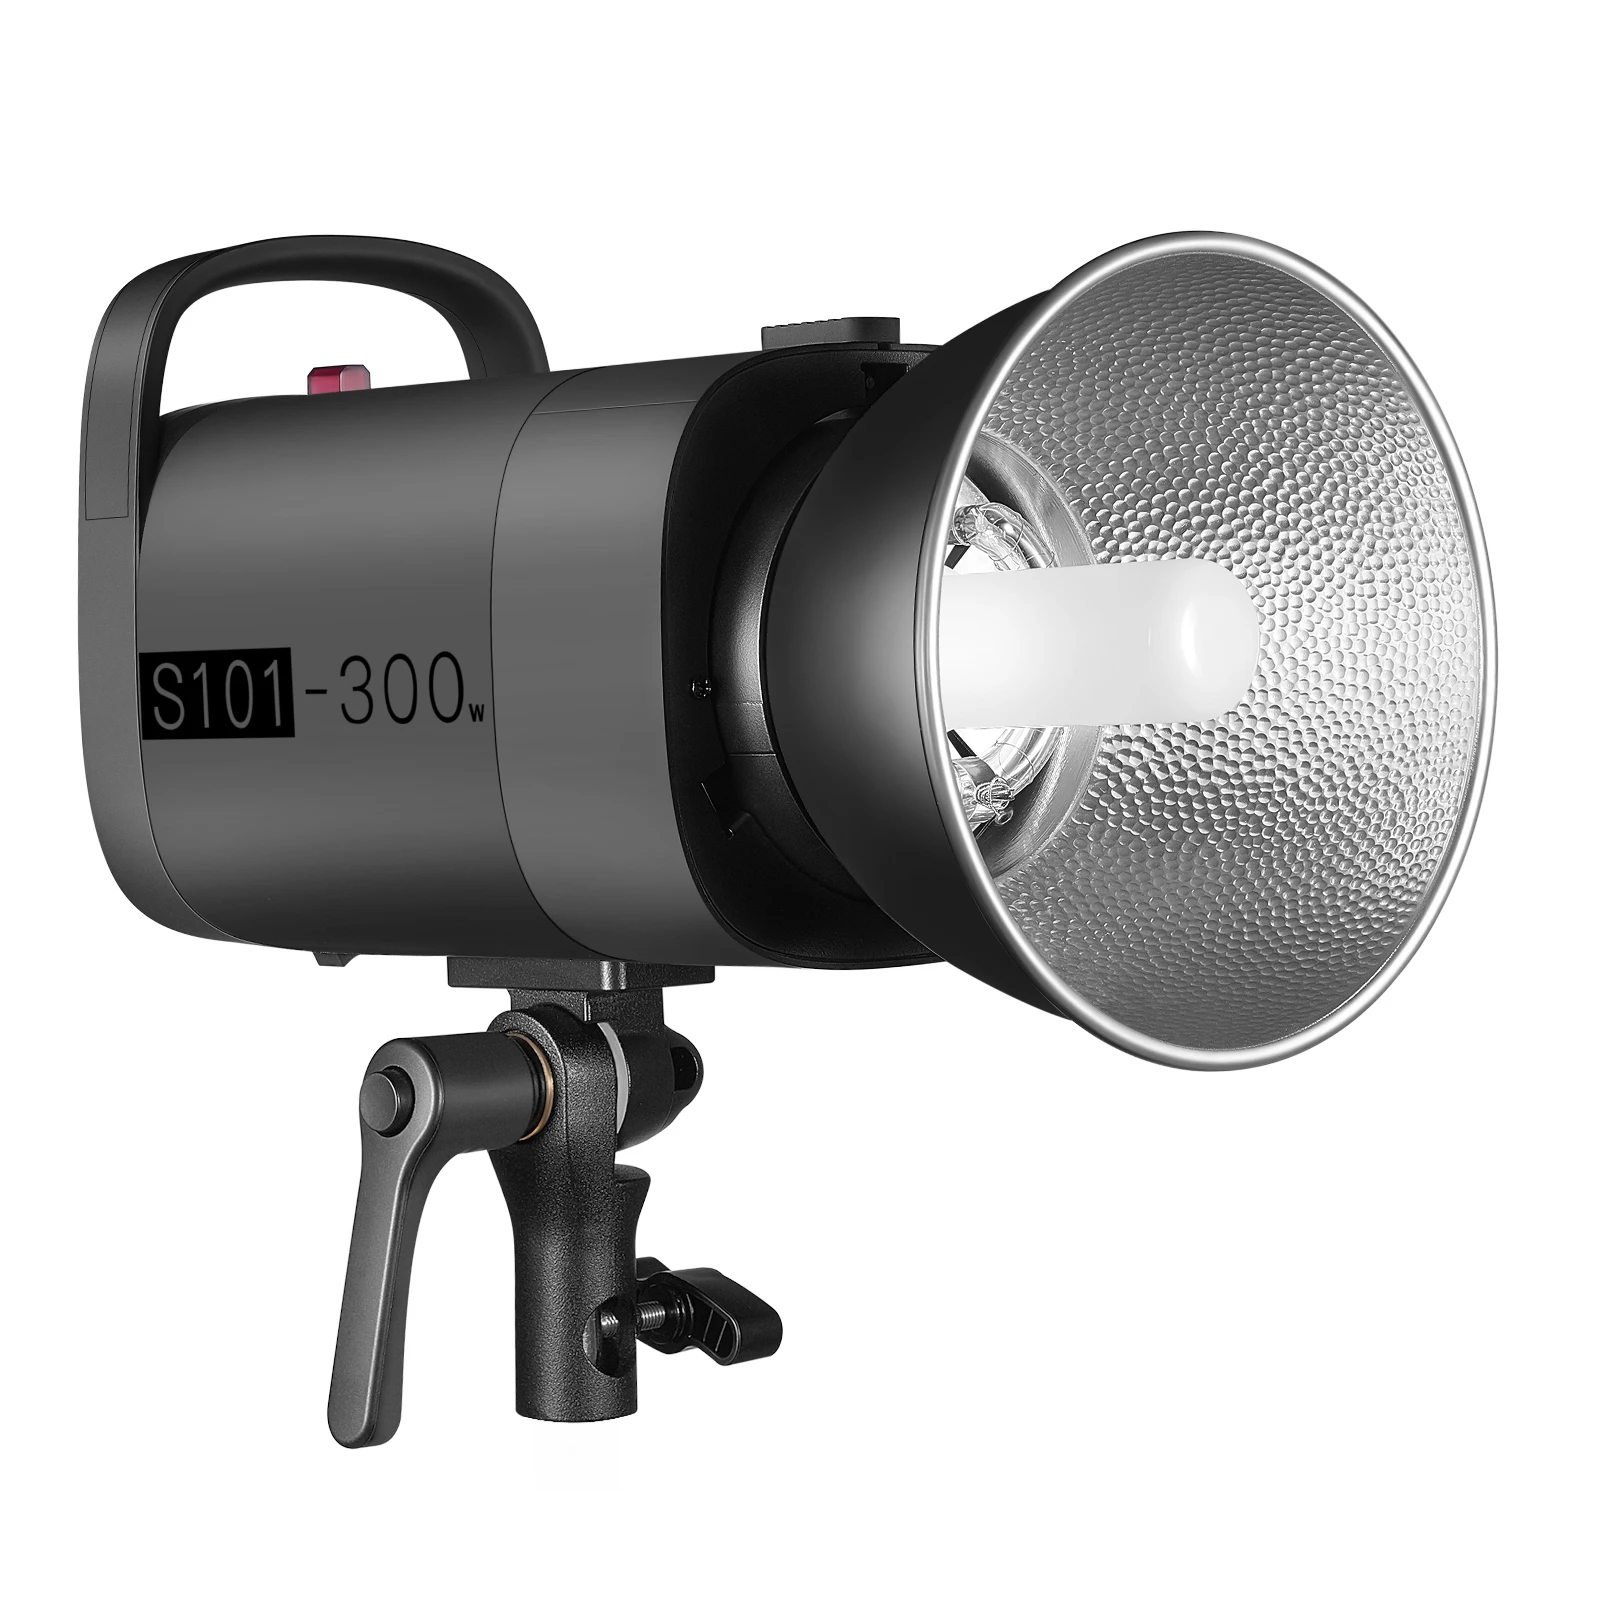 

Neewer S101-300W Professional Studio Monolight Strobe Flash Light 300W 5600K with Modeling Lamp Aluminium Alloy Bowens Mount